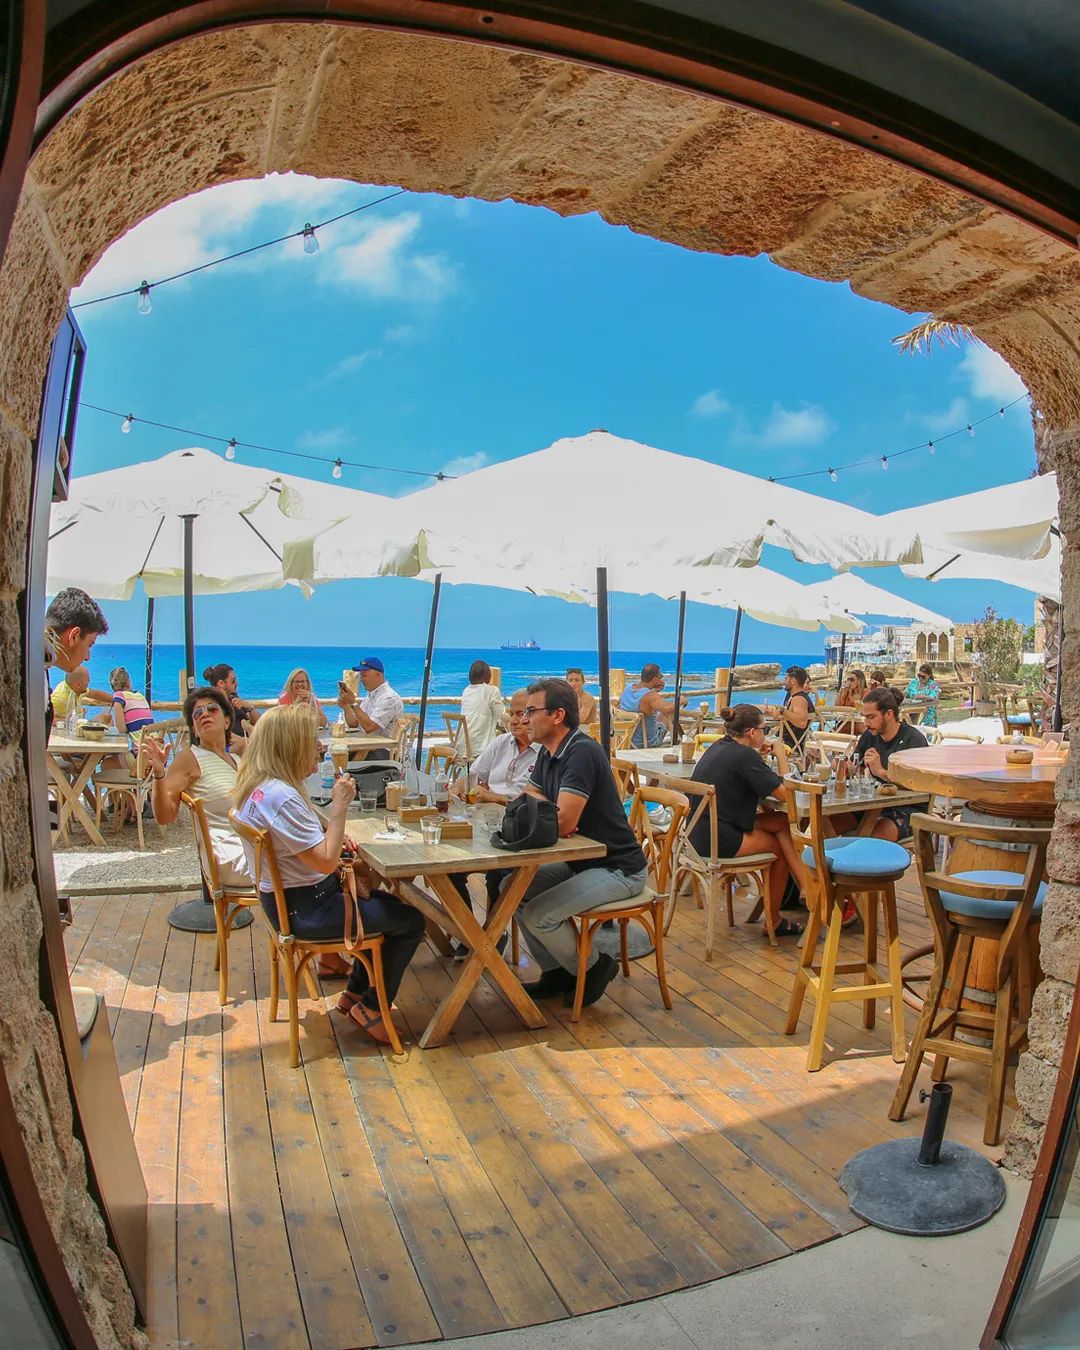 alapier-new-food-spots-lebanon-traveler-tourism